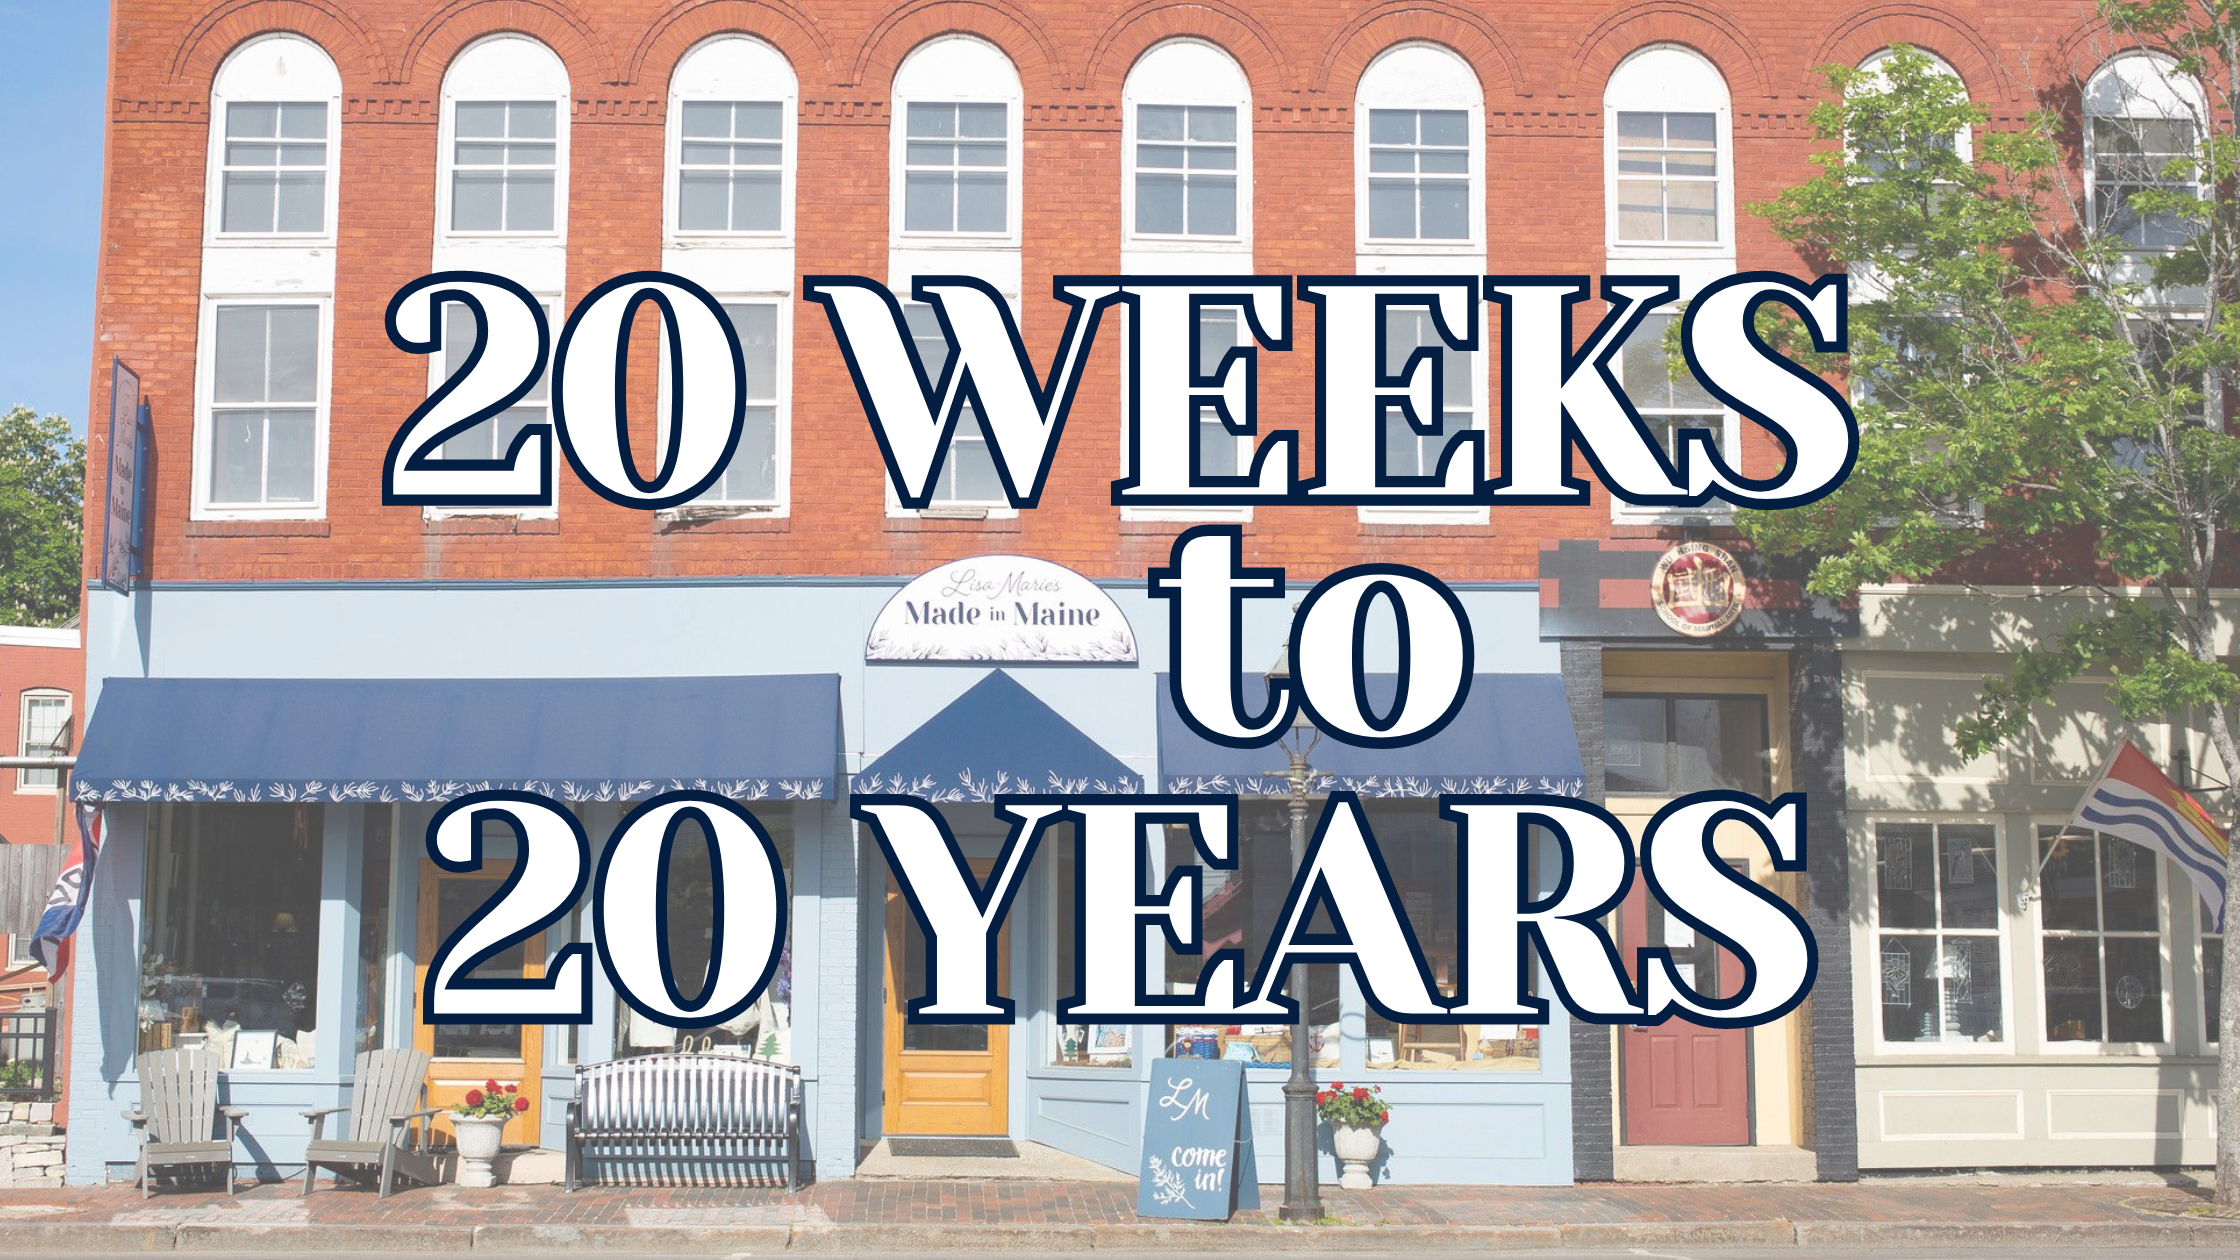 20 Weeks to 20 Years